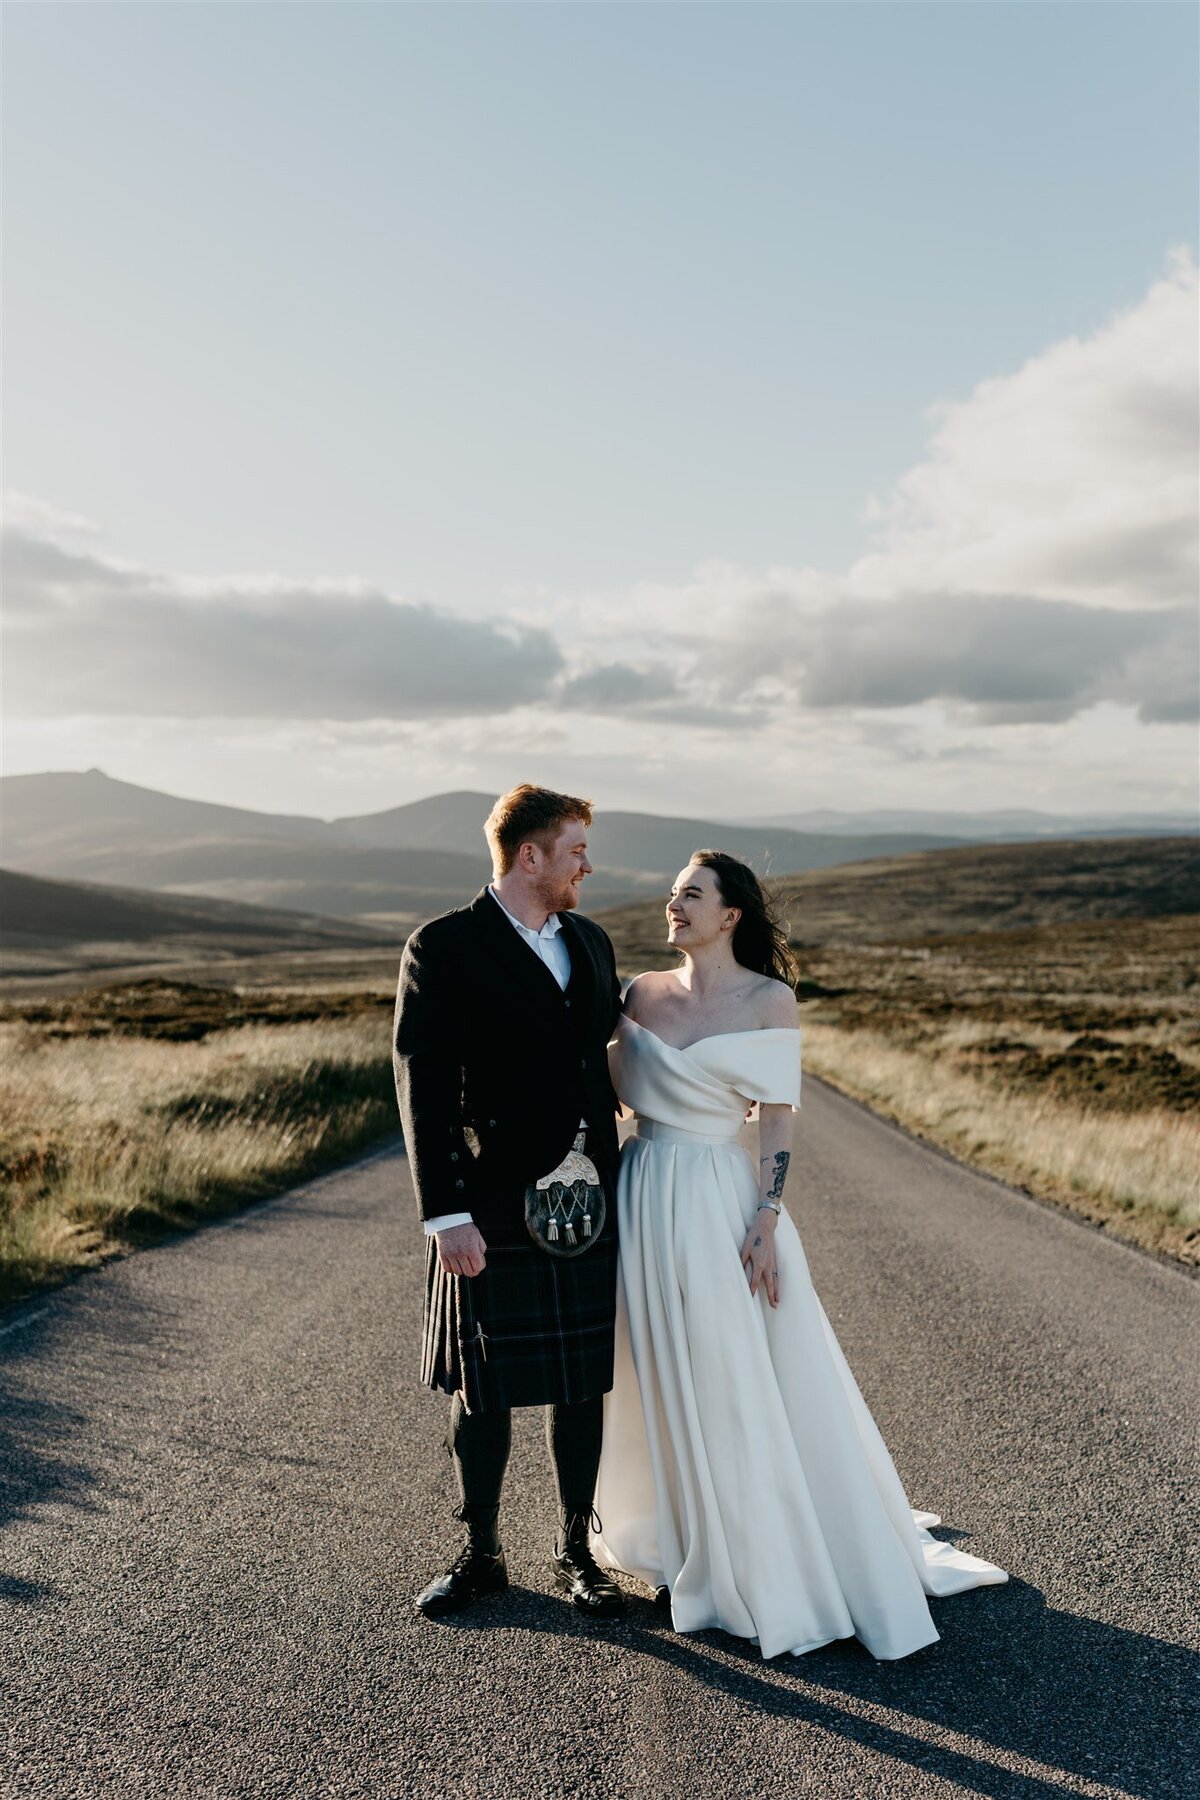 Aberdeen Wedding Photographer Scott Arlow | Scotland Wedding Photography - 25